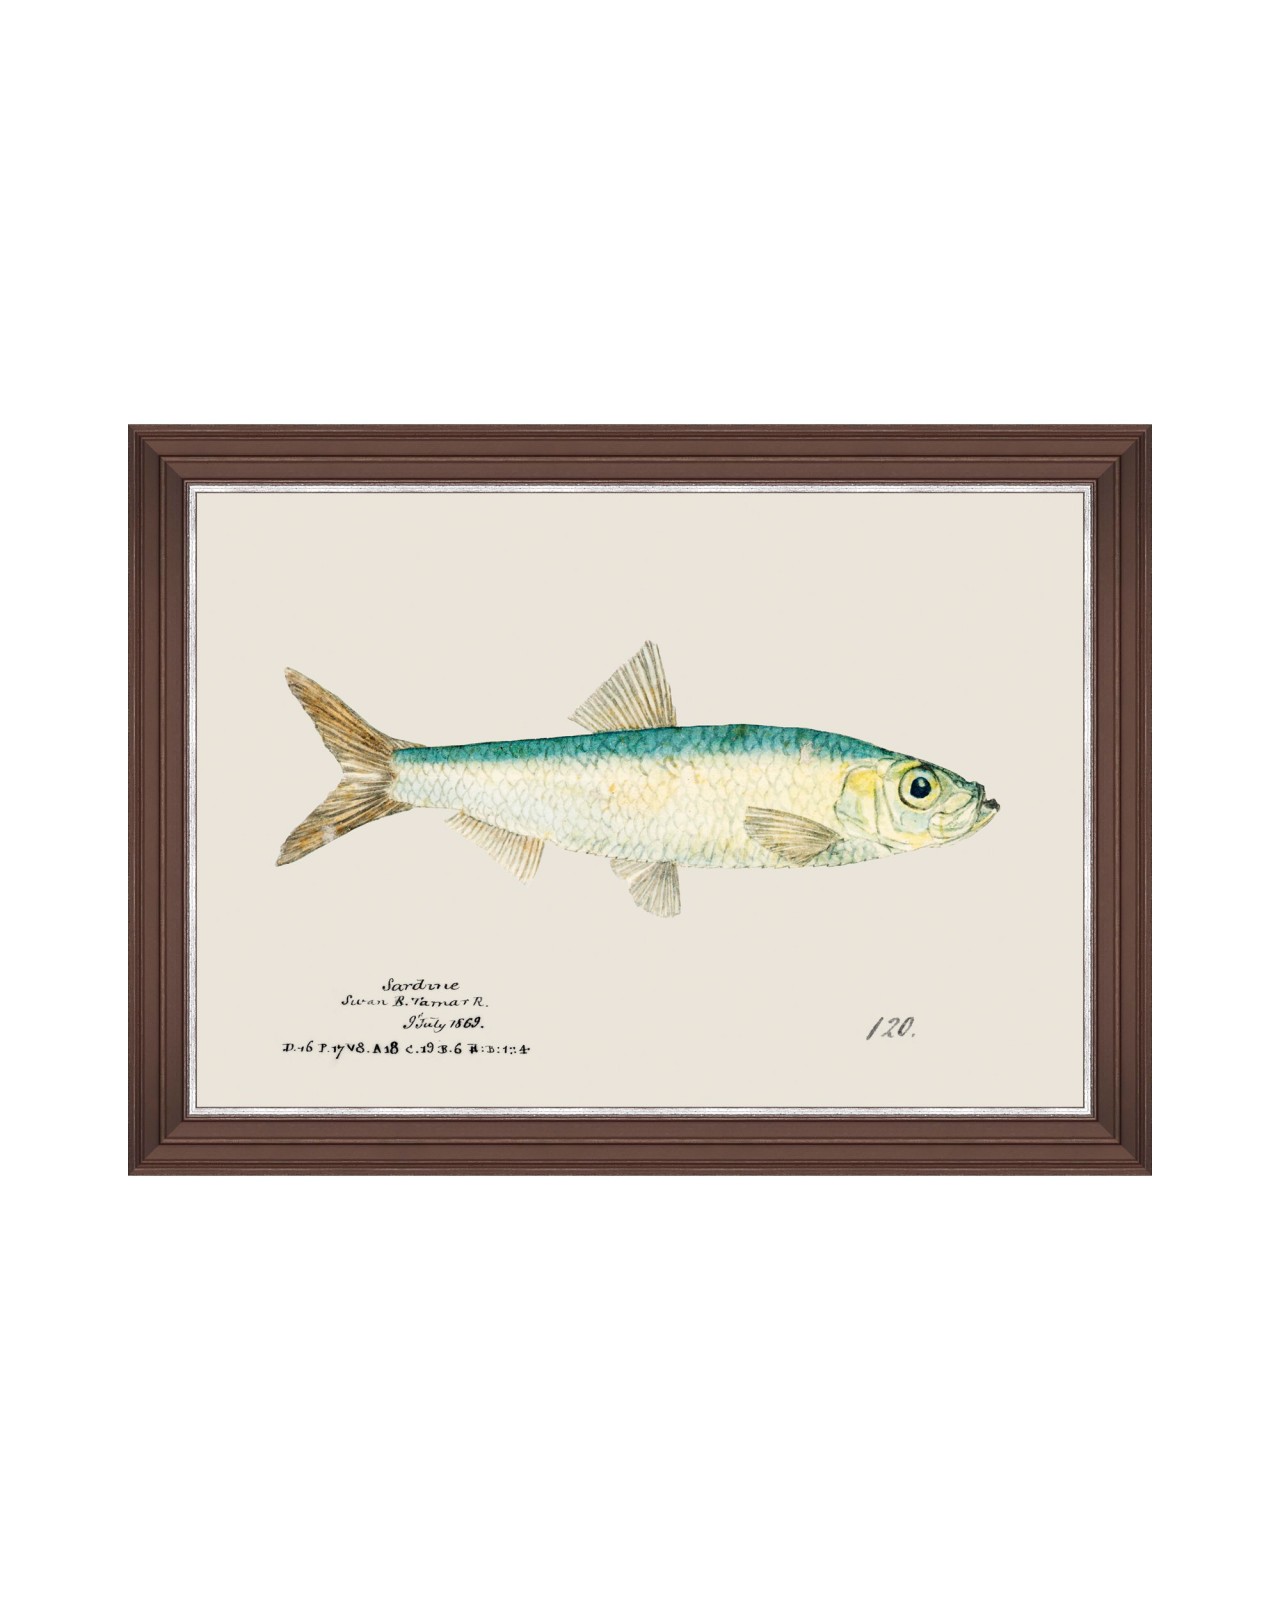 images/productimages/small/mediterraean-fish-sardine-by-f-clark-framed-art-50x35cm-fa13301.jpg